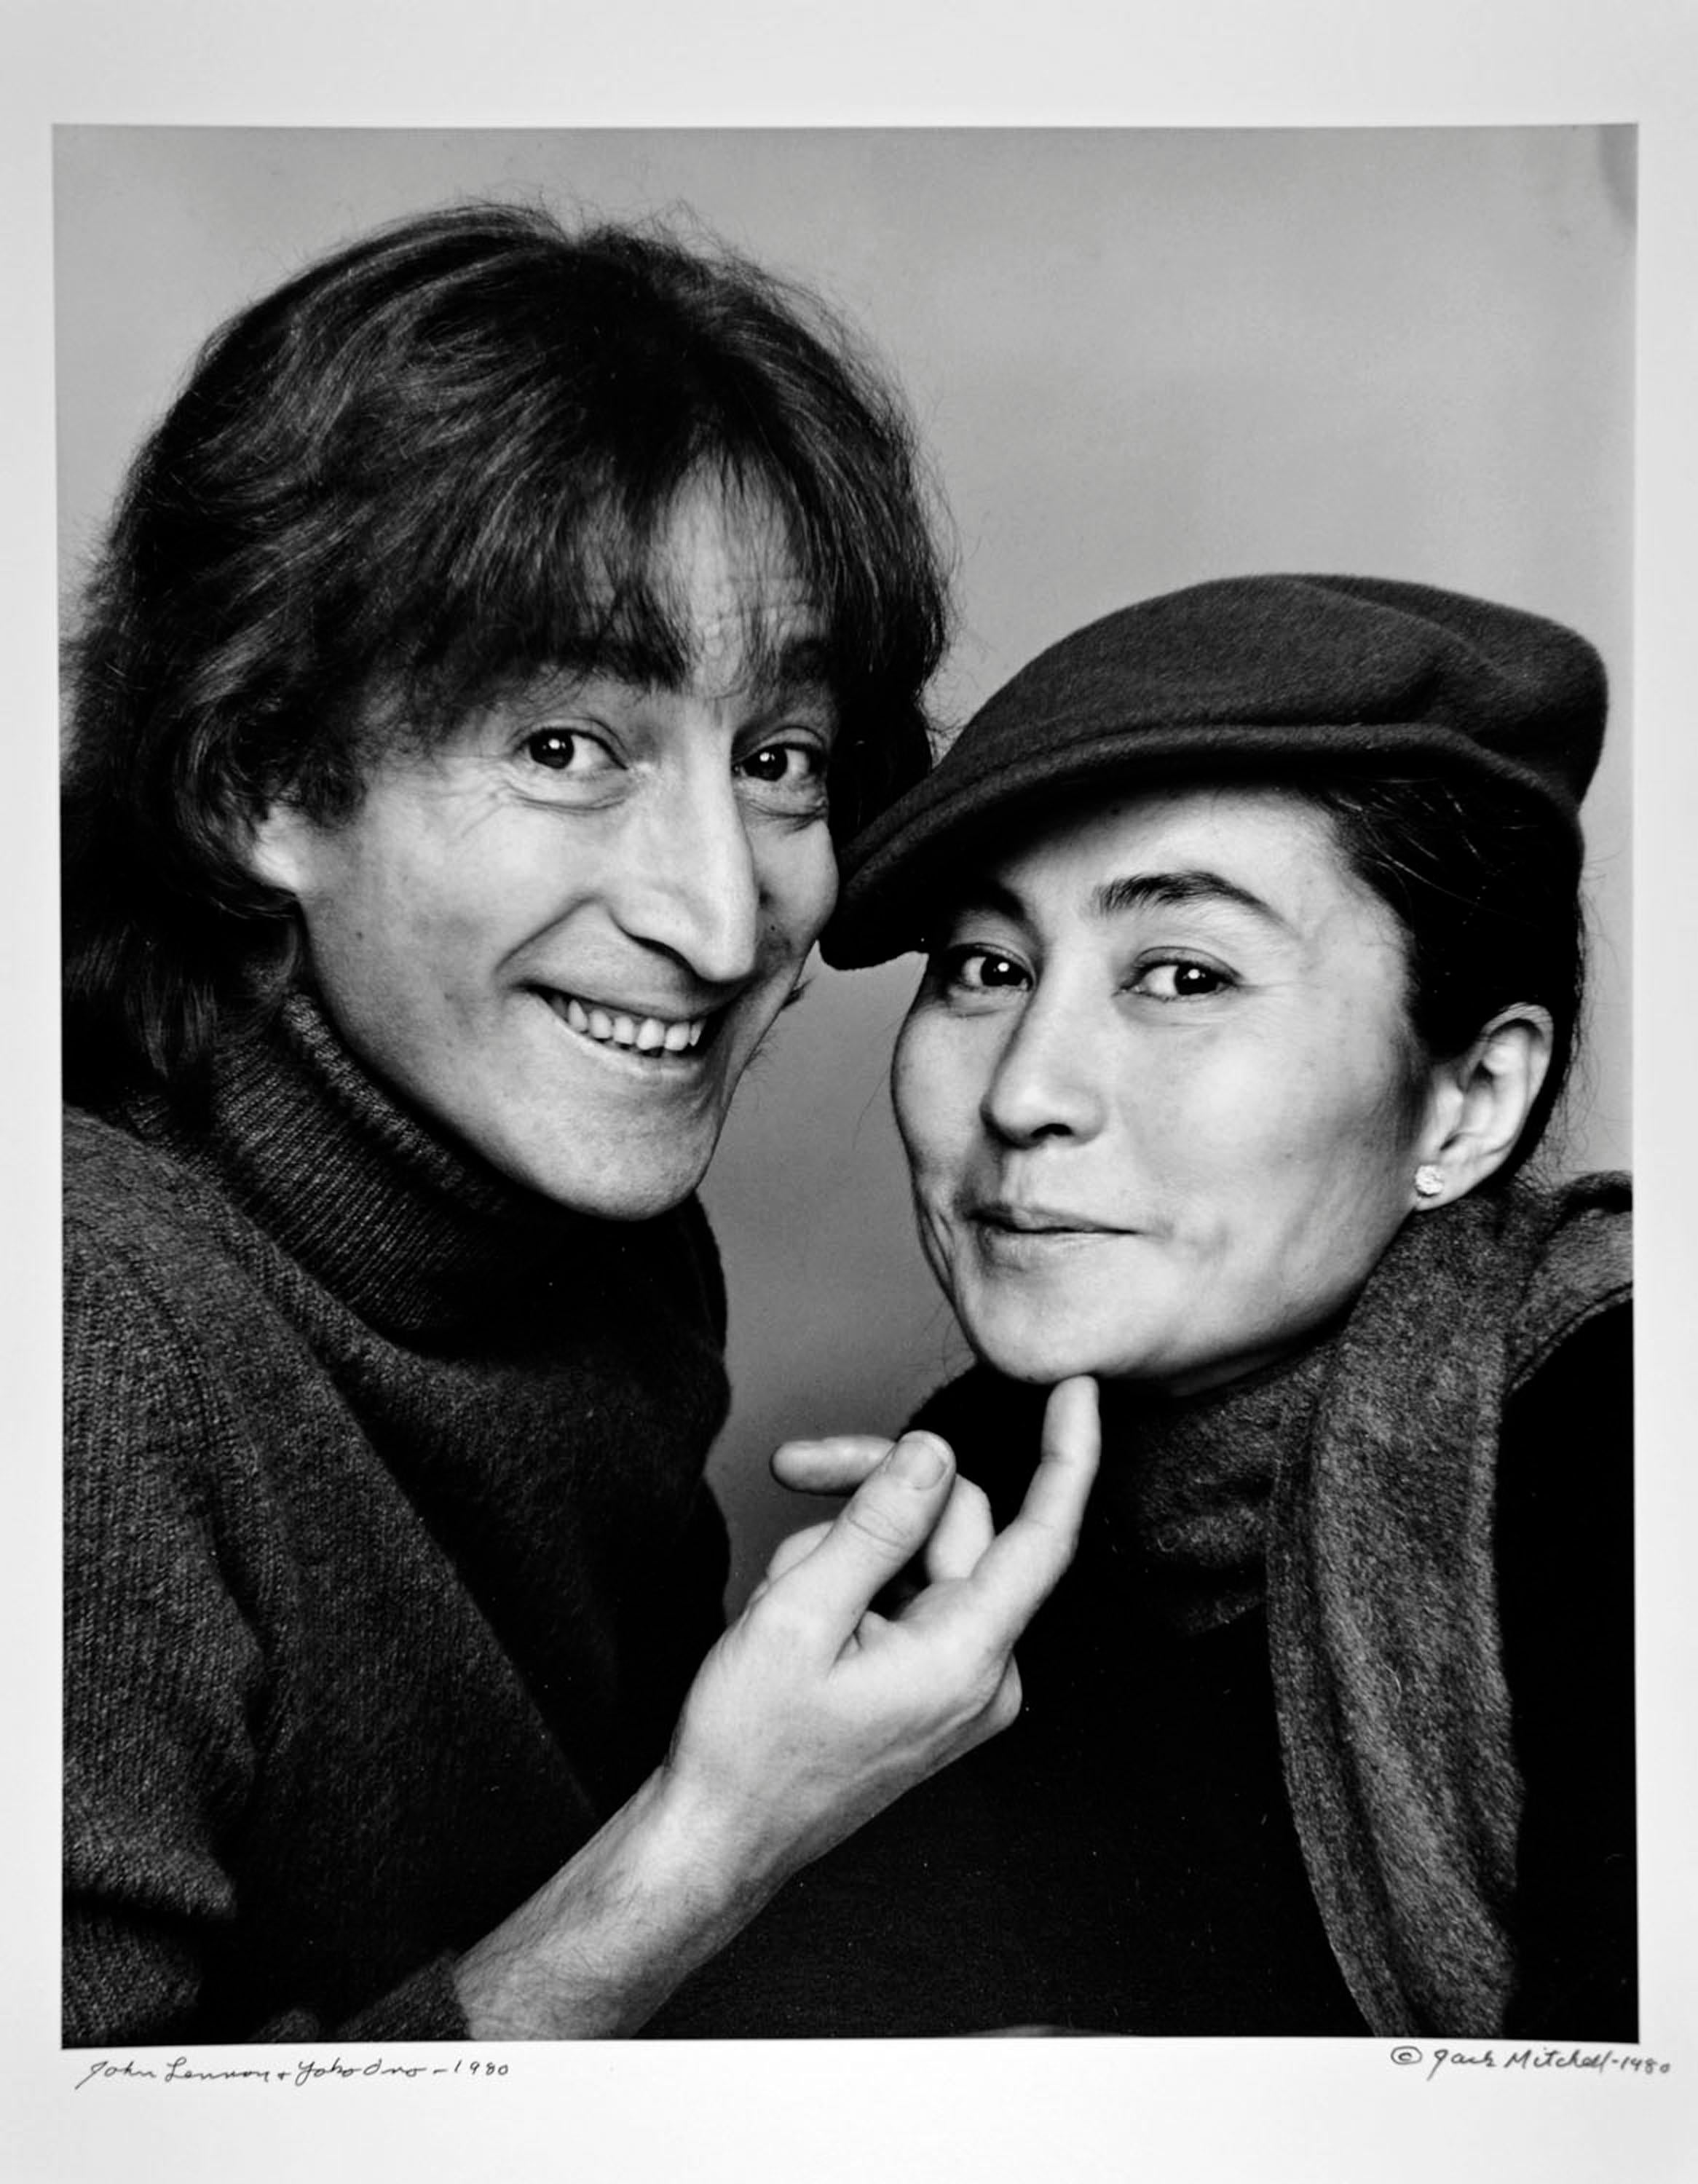 John Lennon und Yoko Ono fotografiert am 2. November, signiert